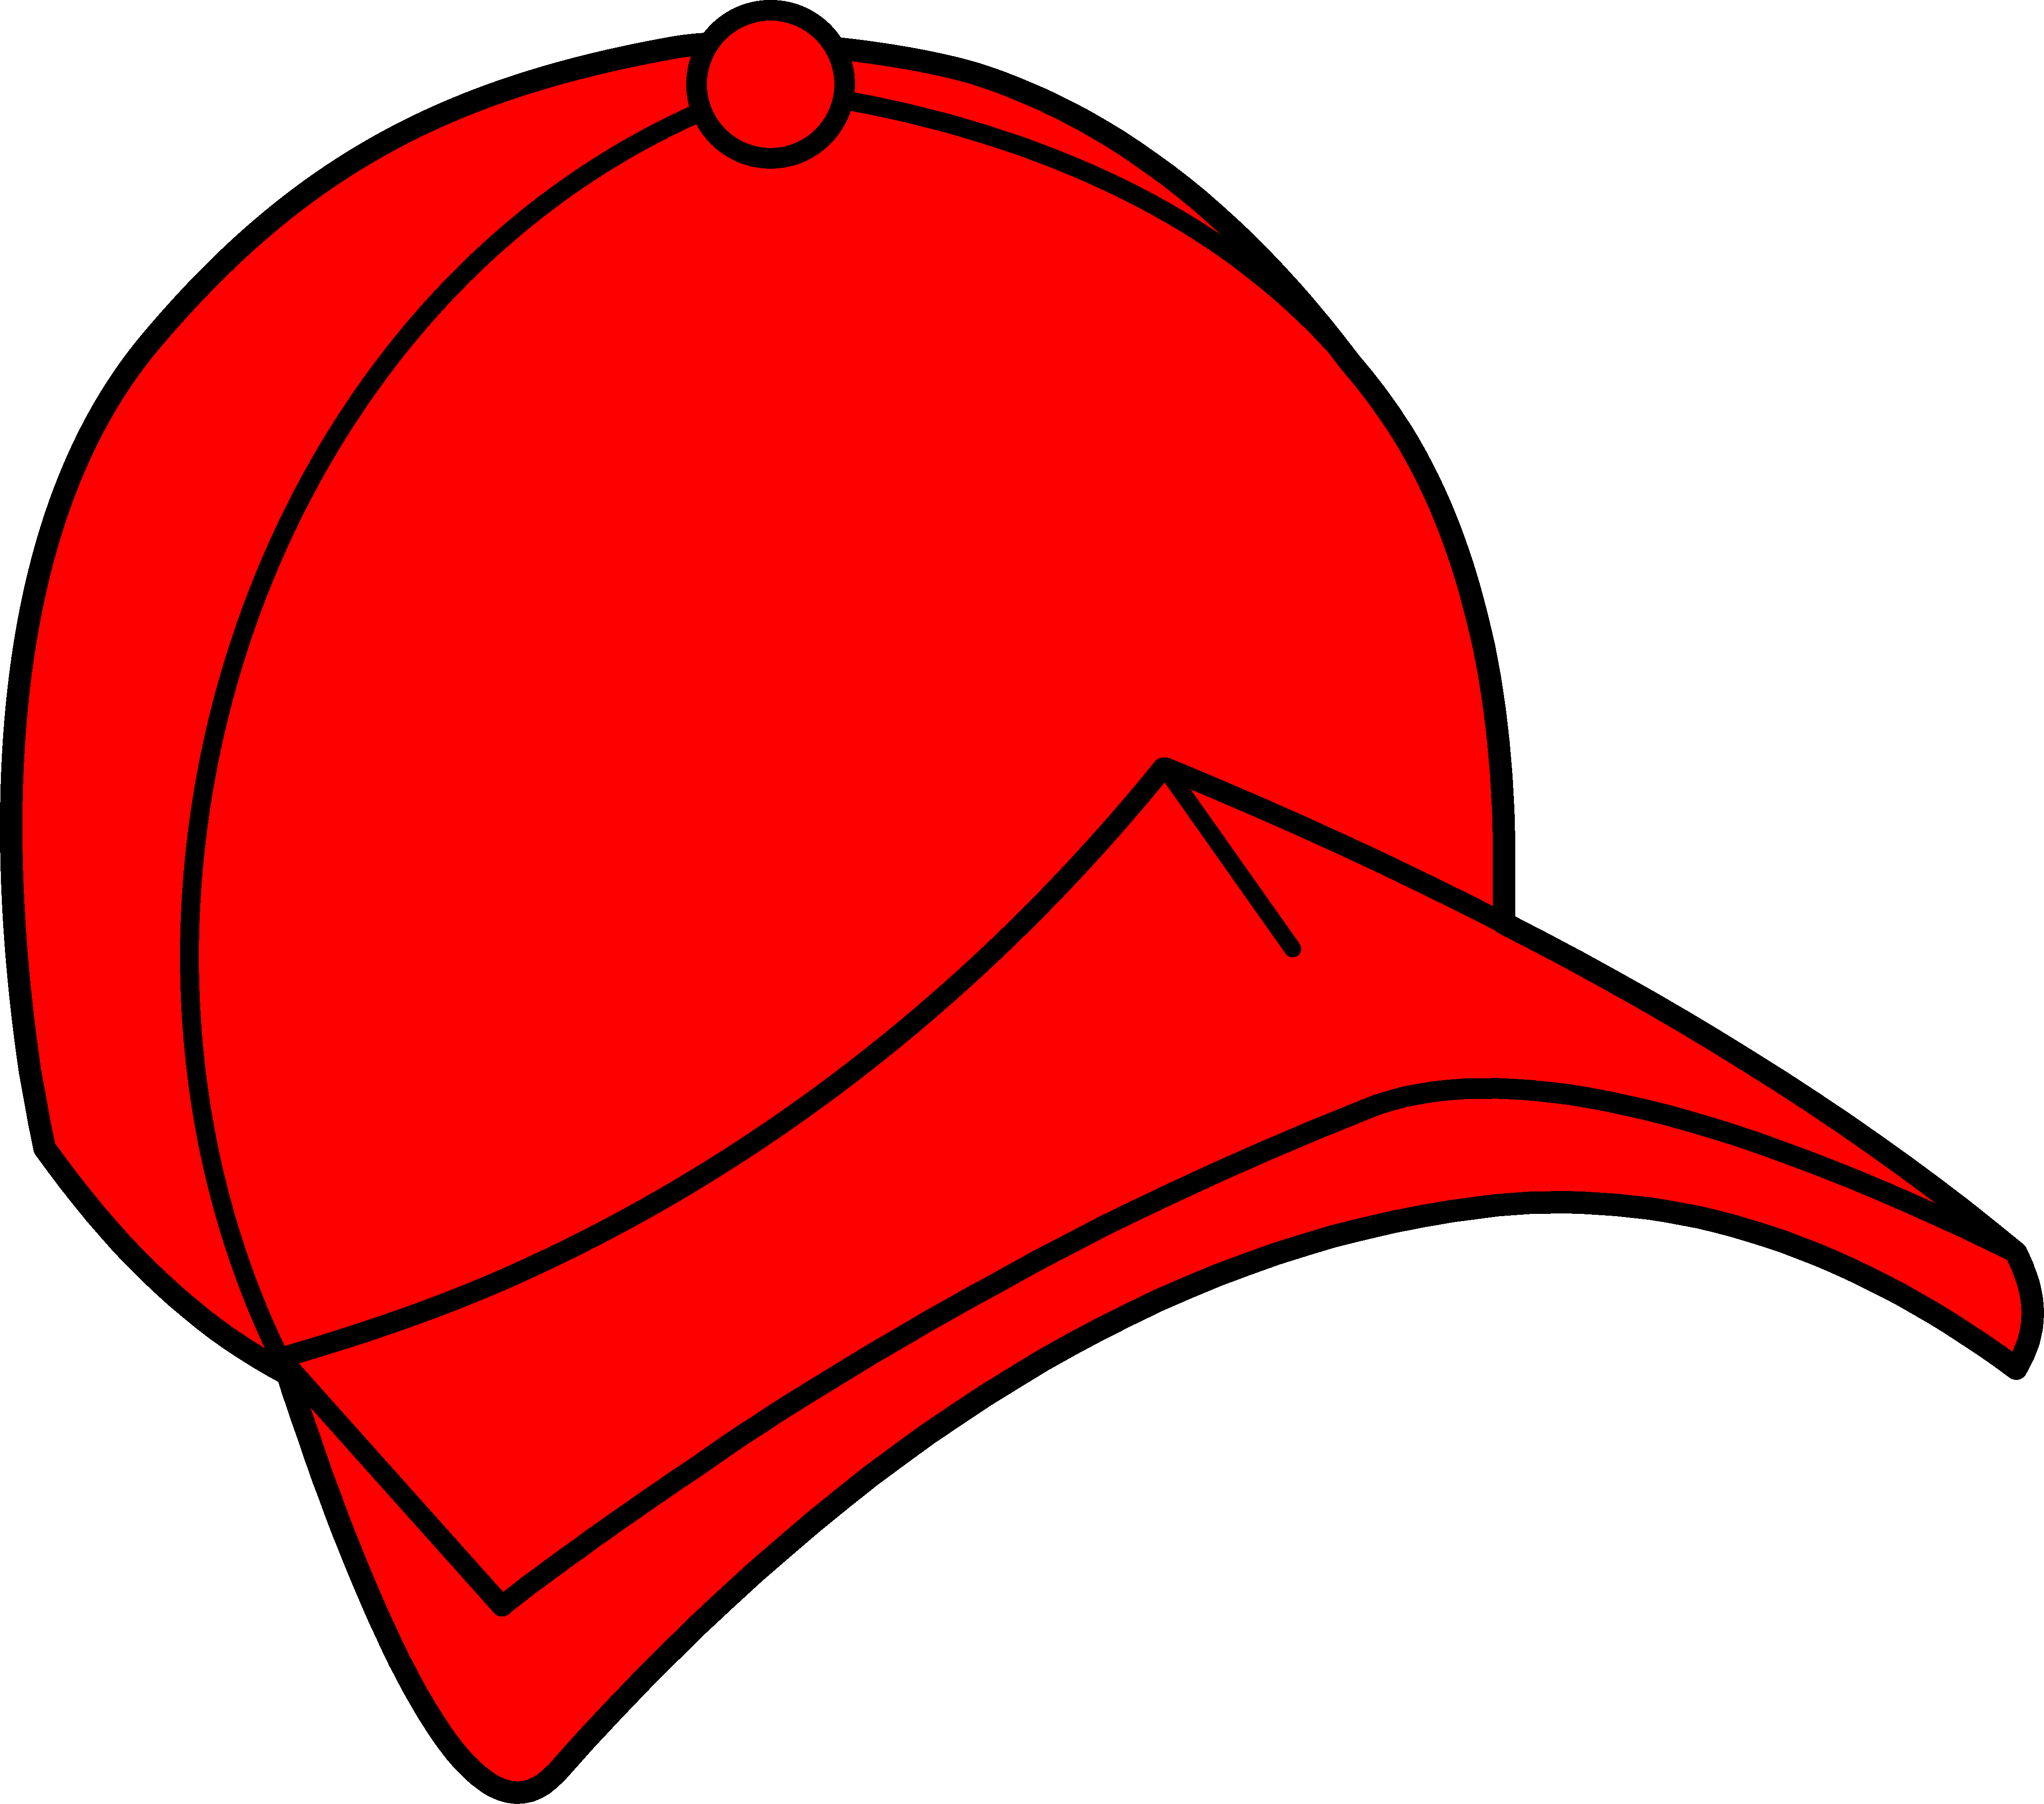 Baseball hat image of baseball cap clipart 1 hat free